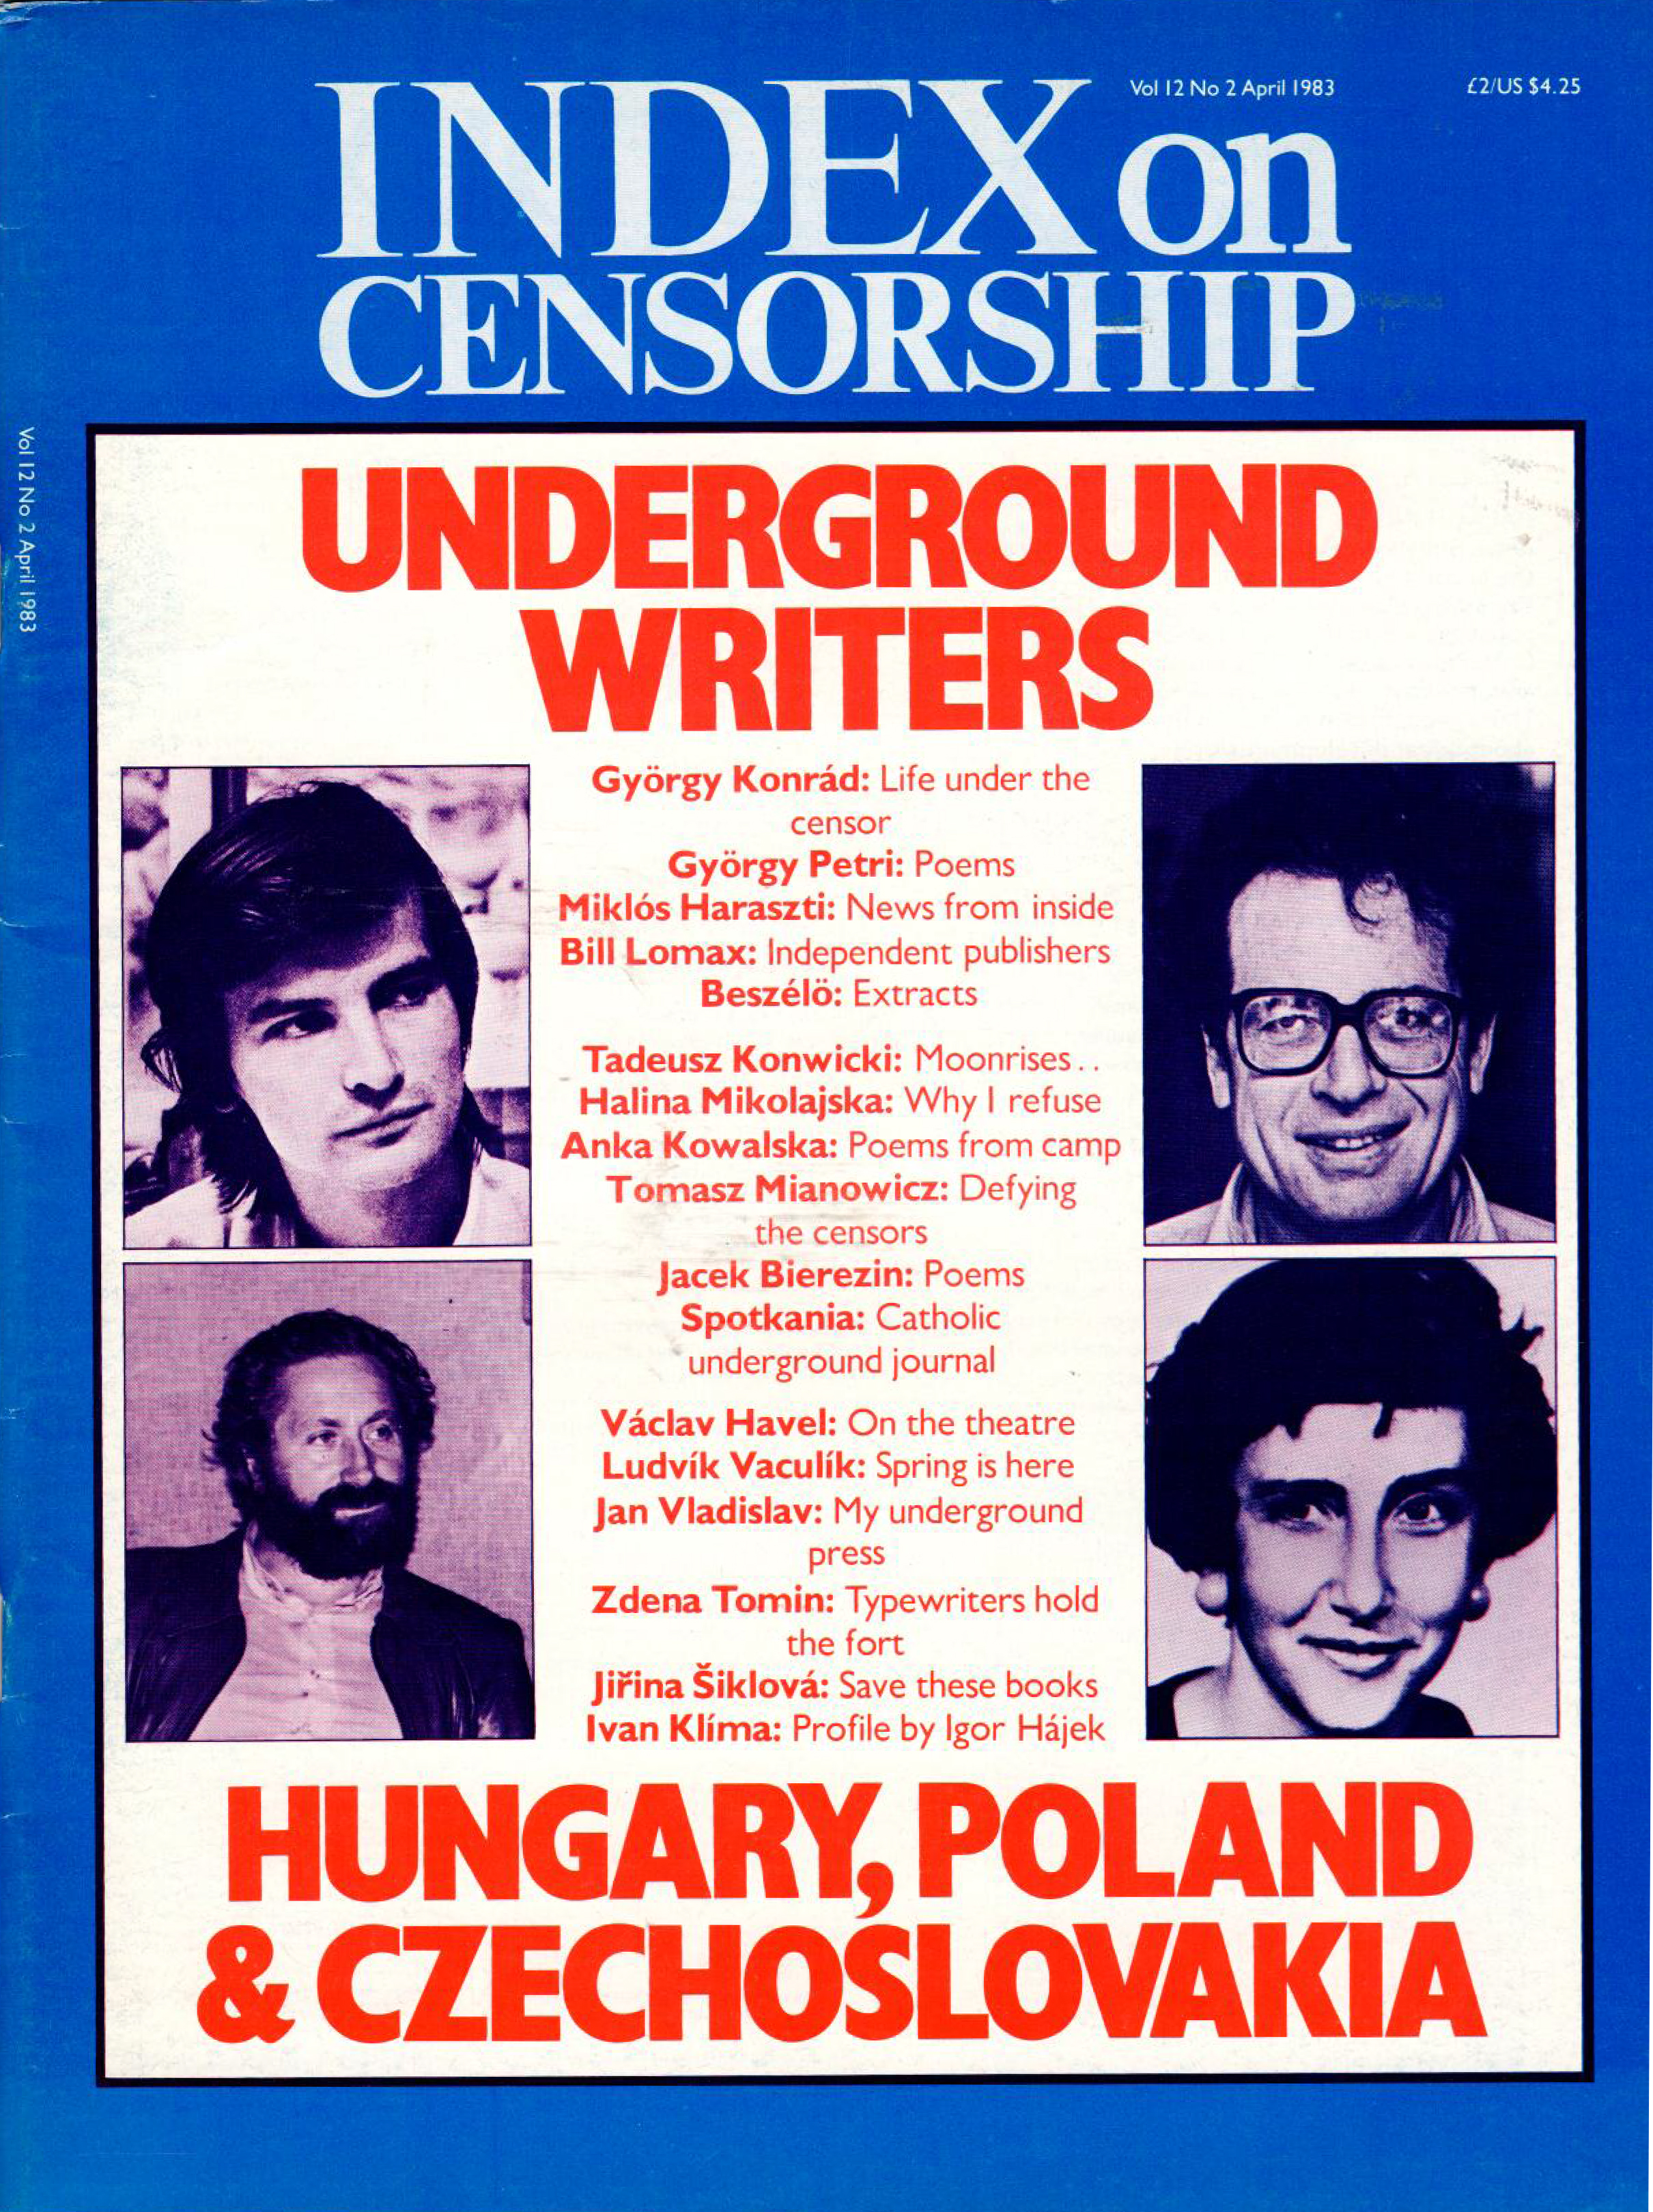 Underground writers: Life under the censor